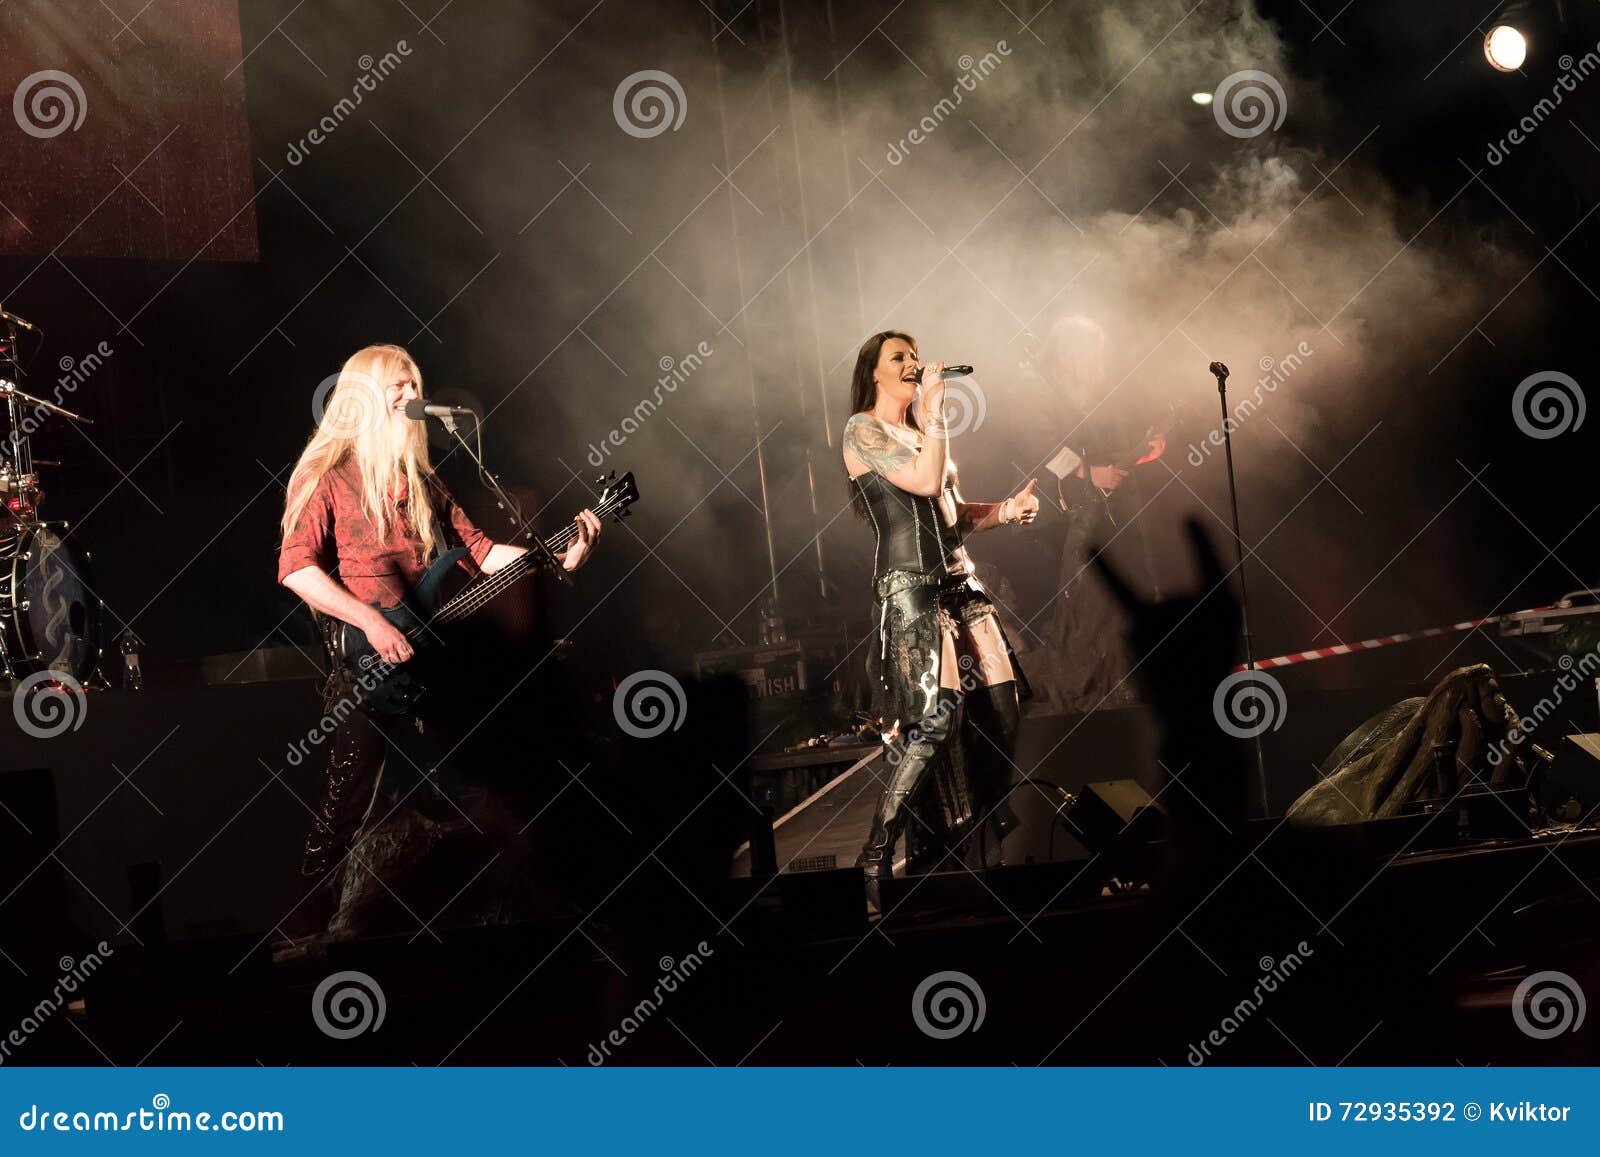 (Nightwish) 22 фото | ThePlace - фотографии знаменитостей